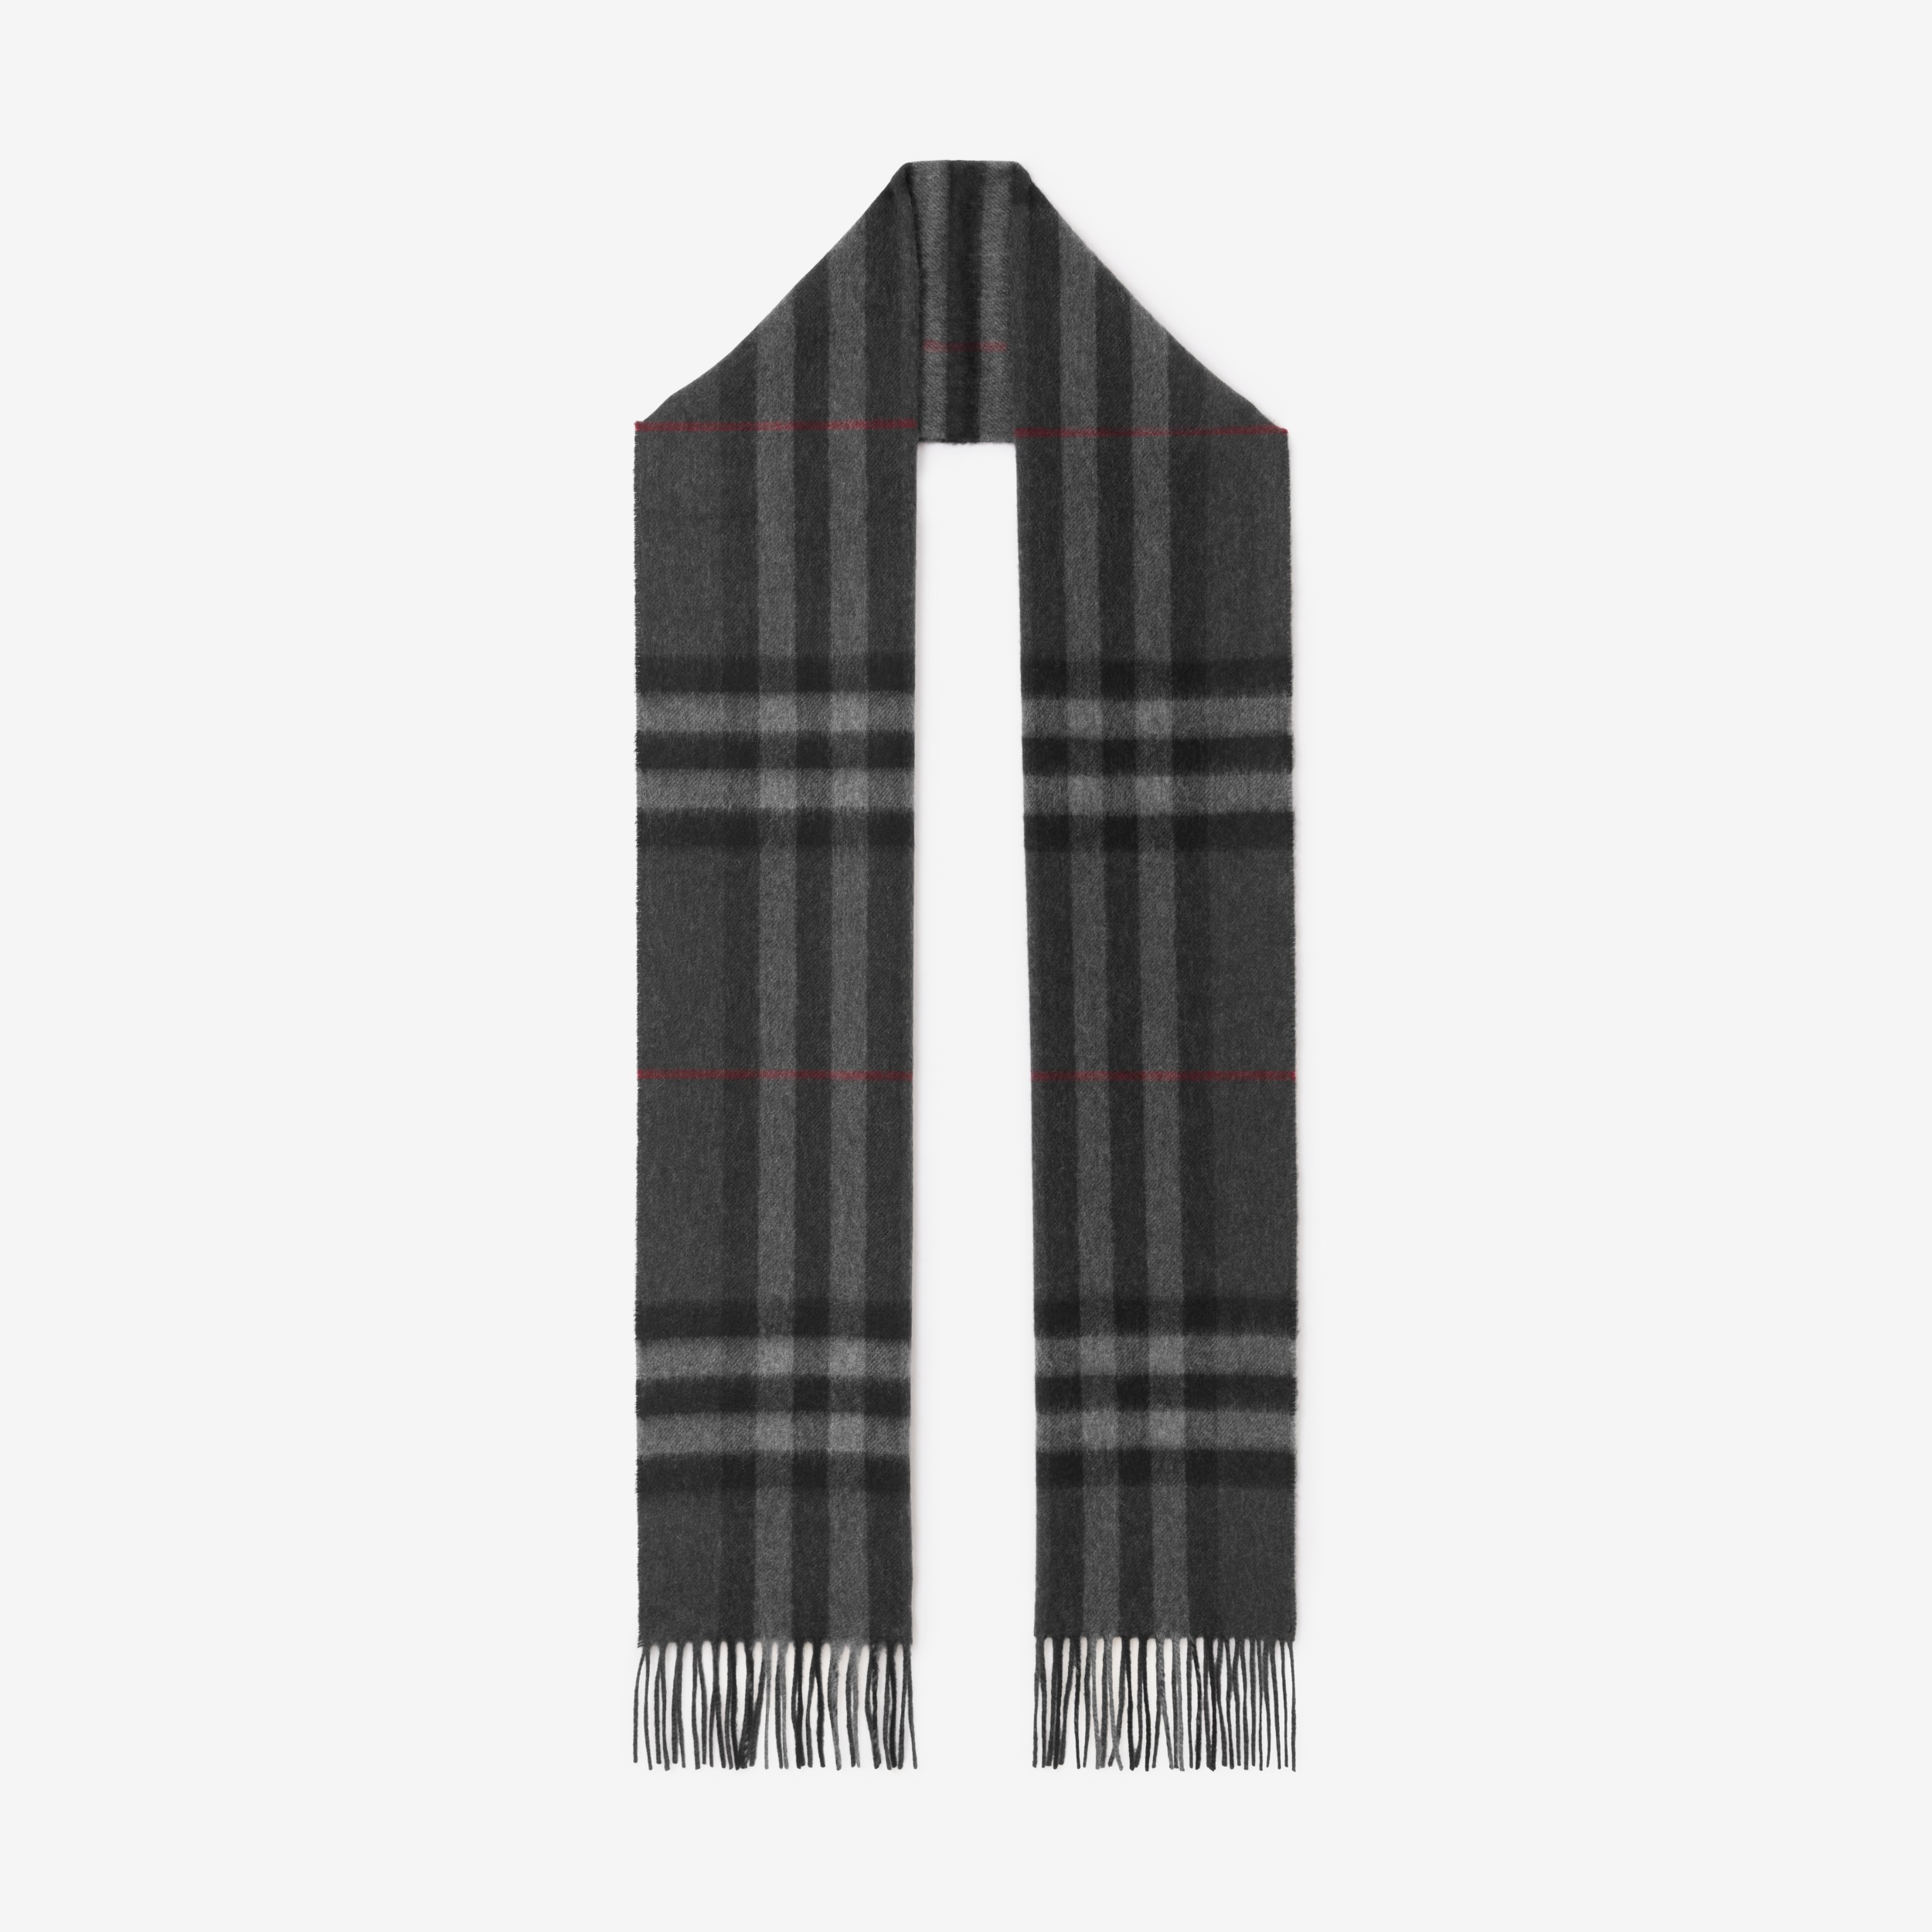 Arriba 81+ imagen burberry charcoal scarf